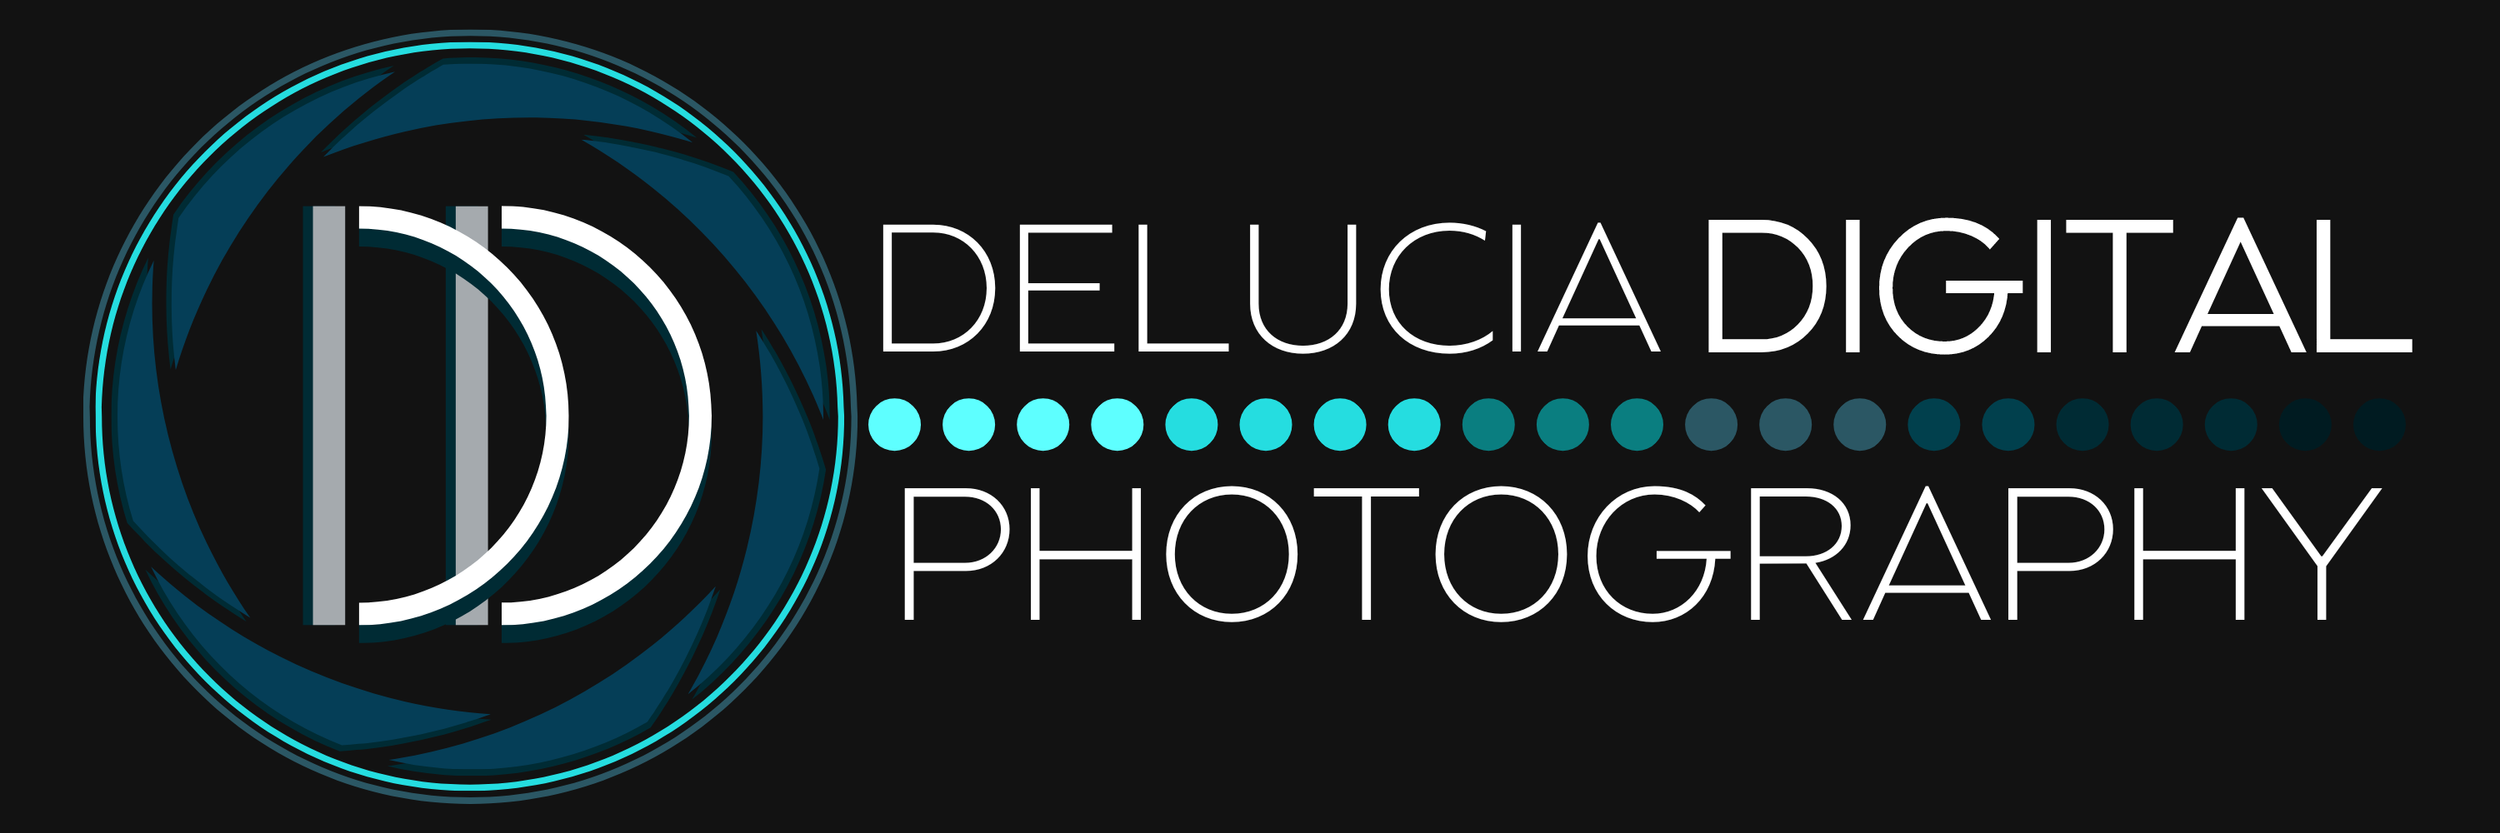 DeLucia Digital Photography